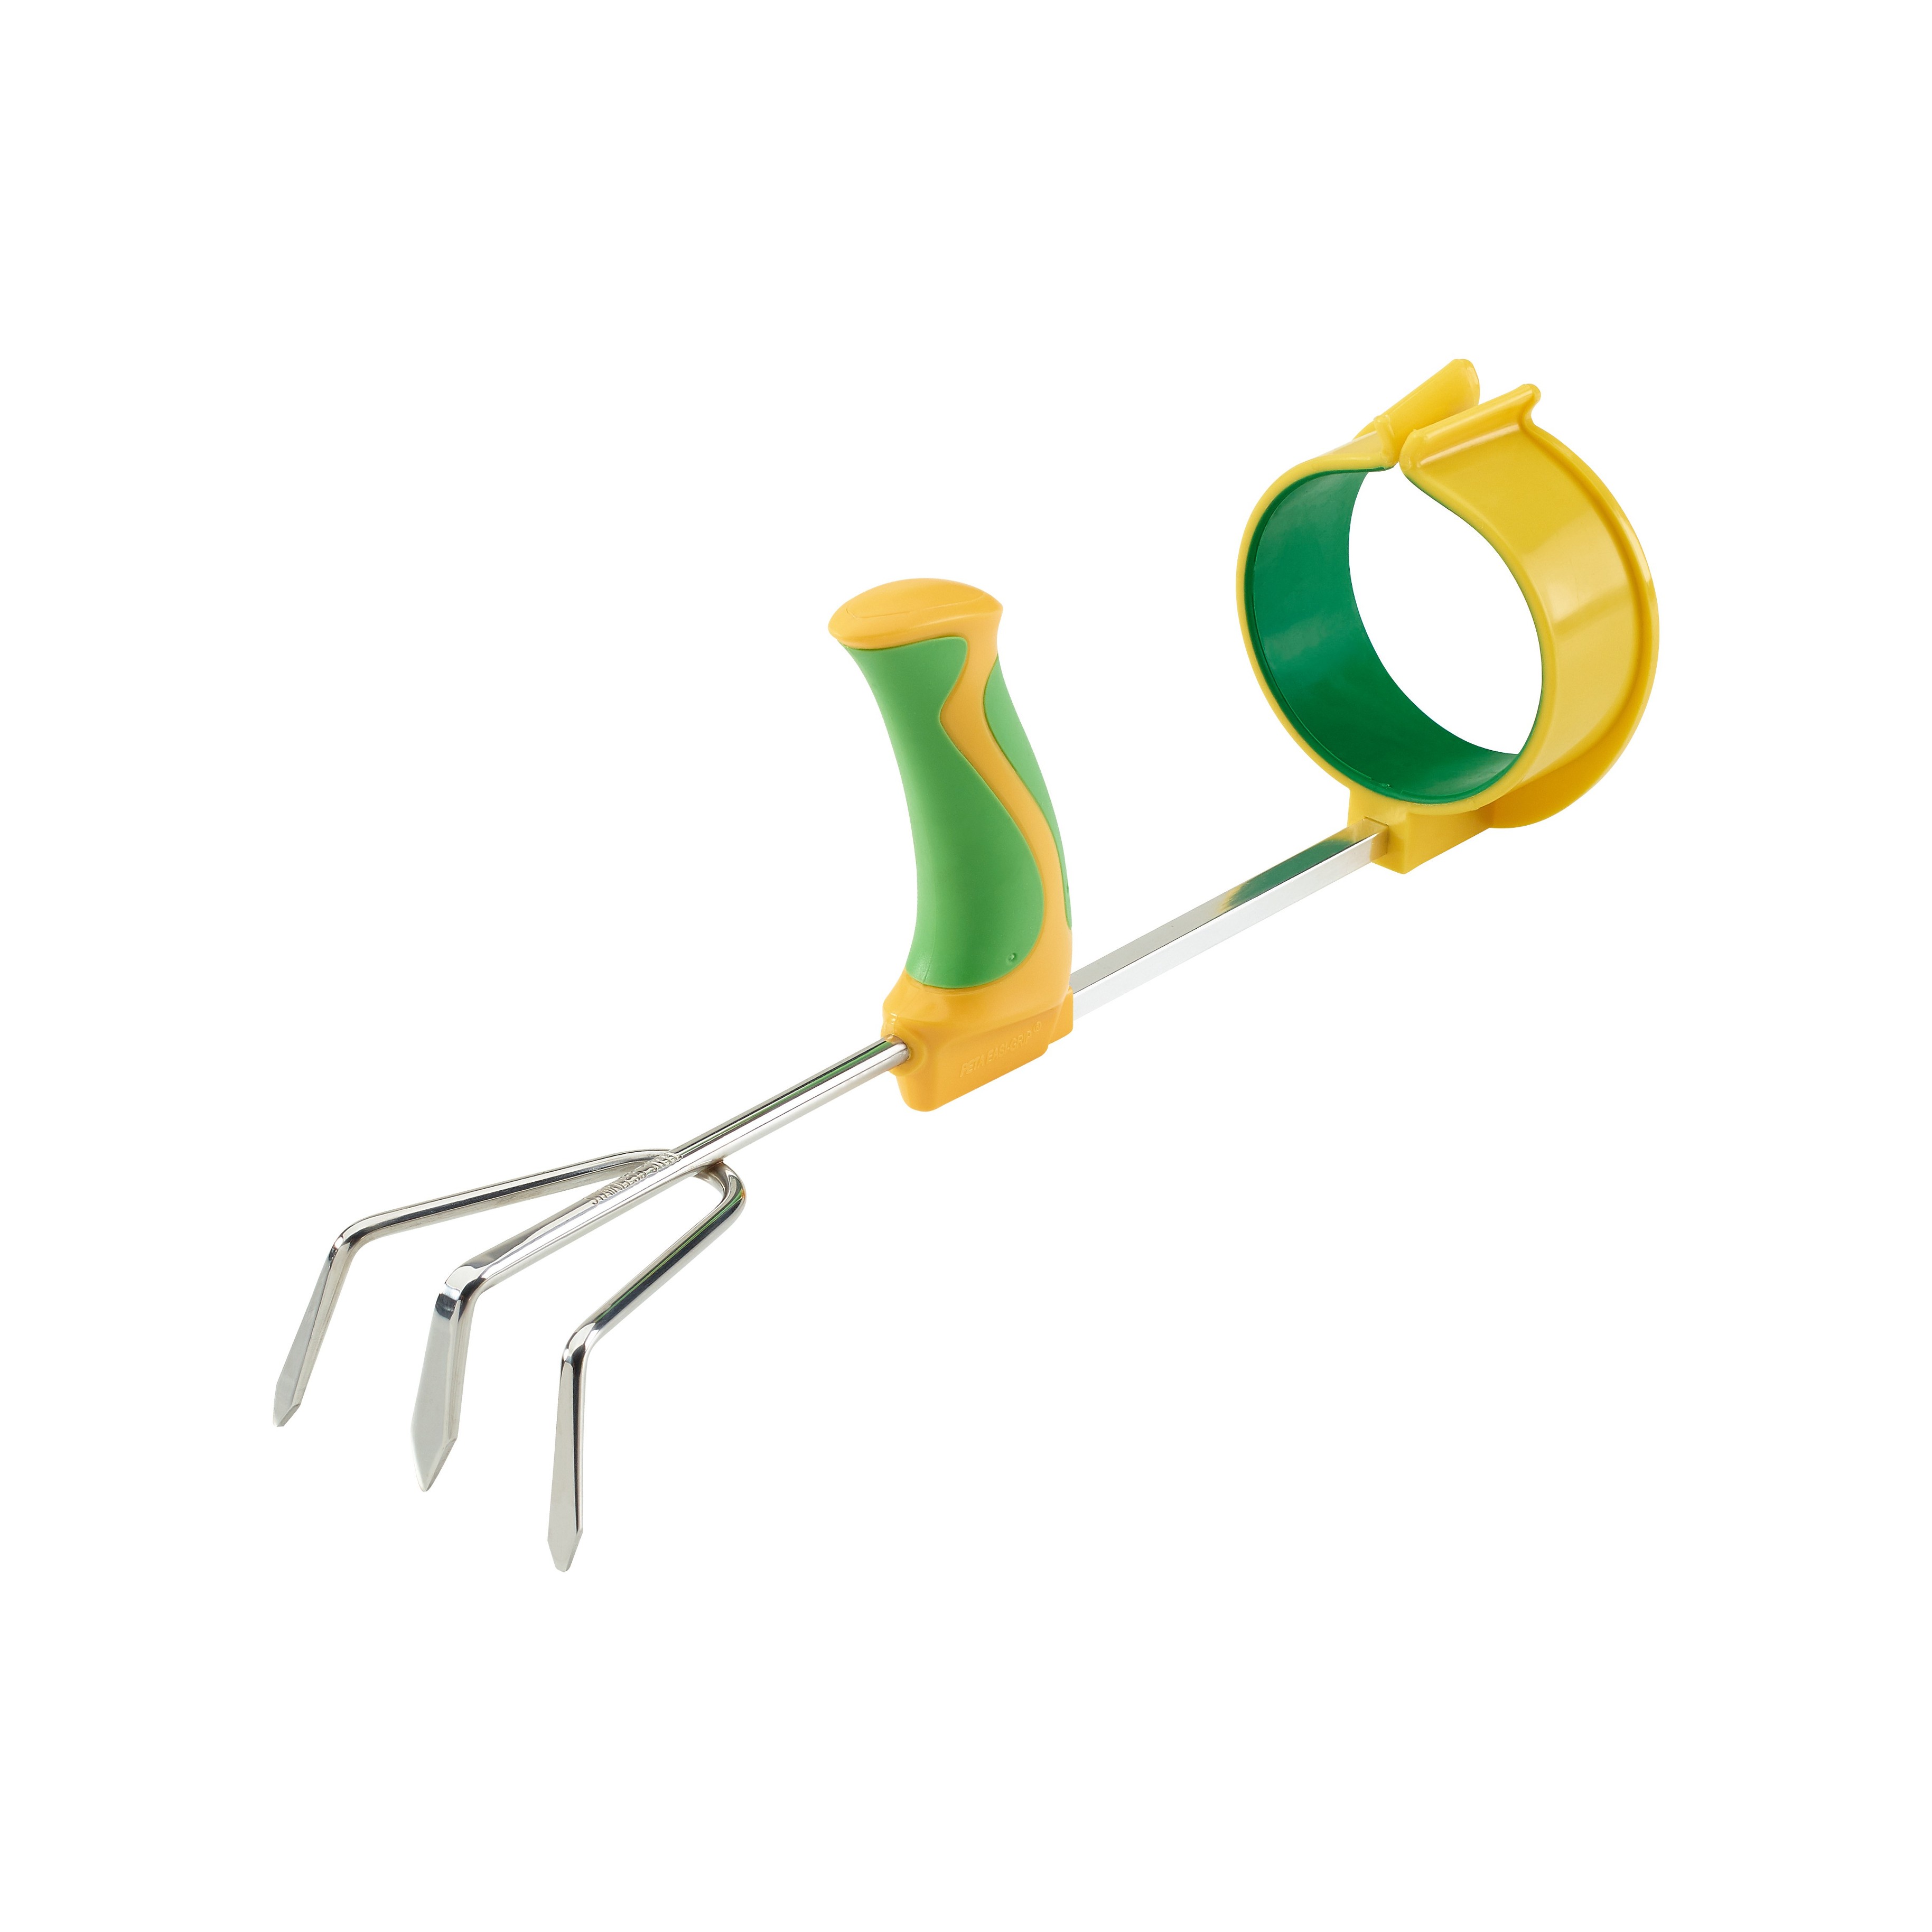 Peta Easi-Grip Cultivator :: arthritis hand tool for gardening